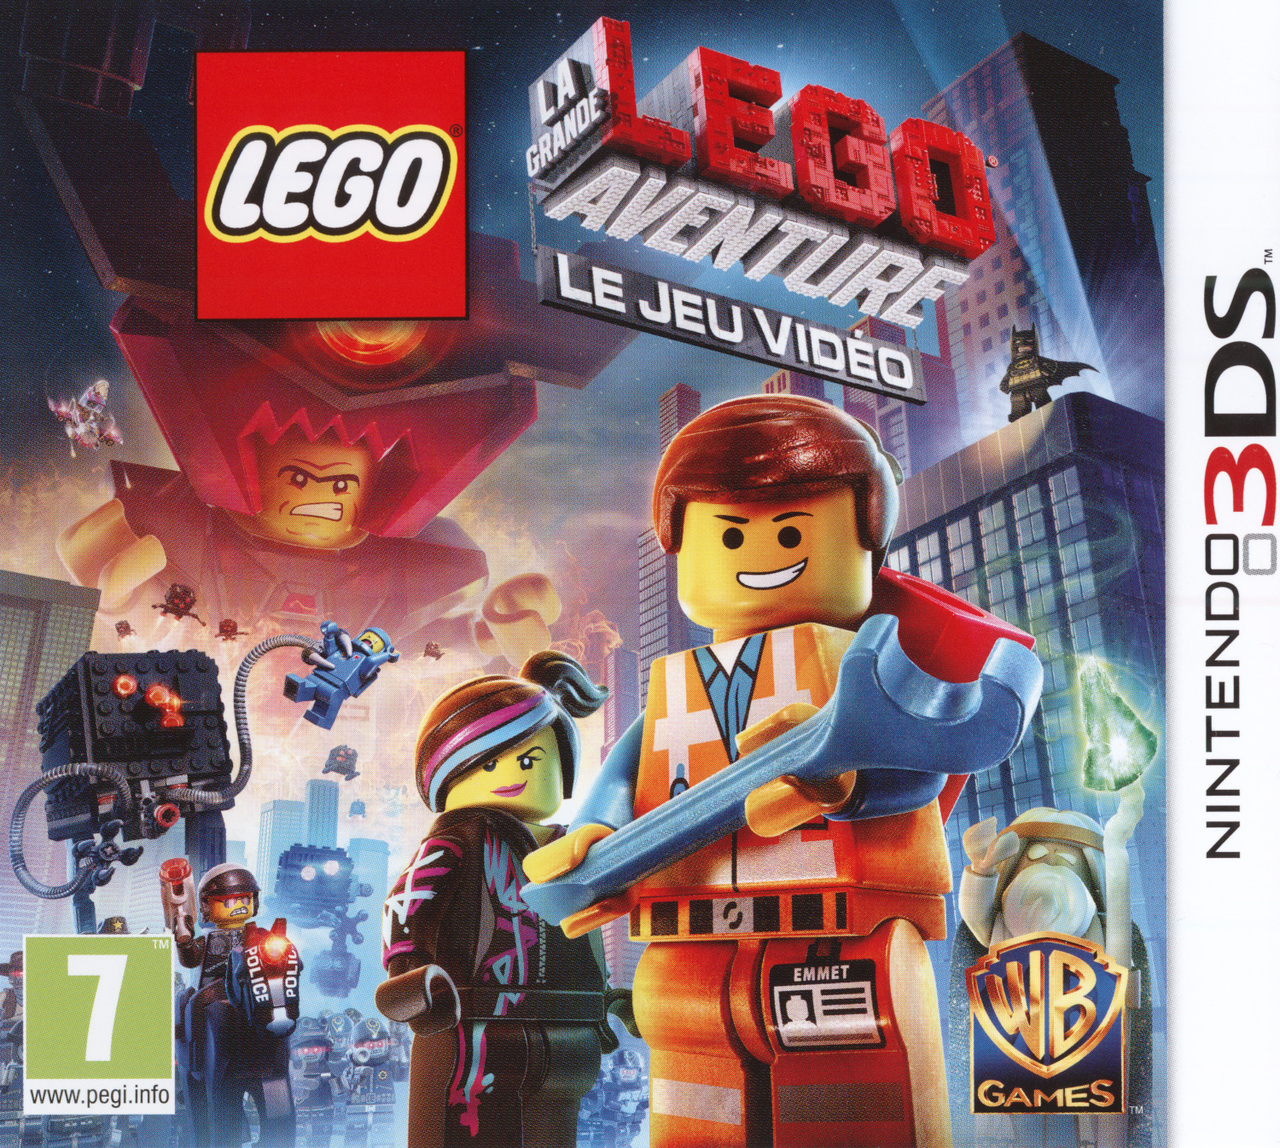 jaquette du jeu vidéo LEGO La Grande Aventure - Le Jeu Vidéo